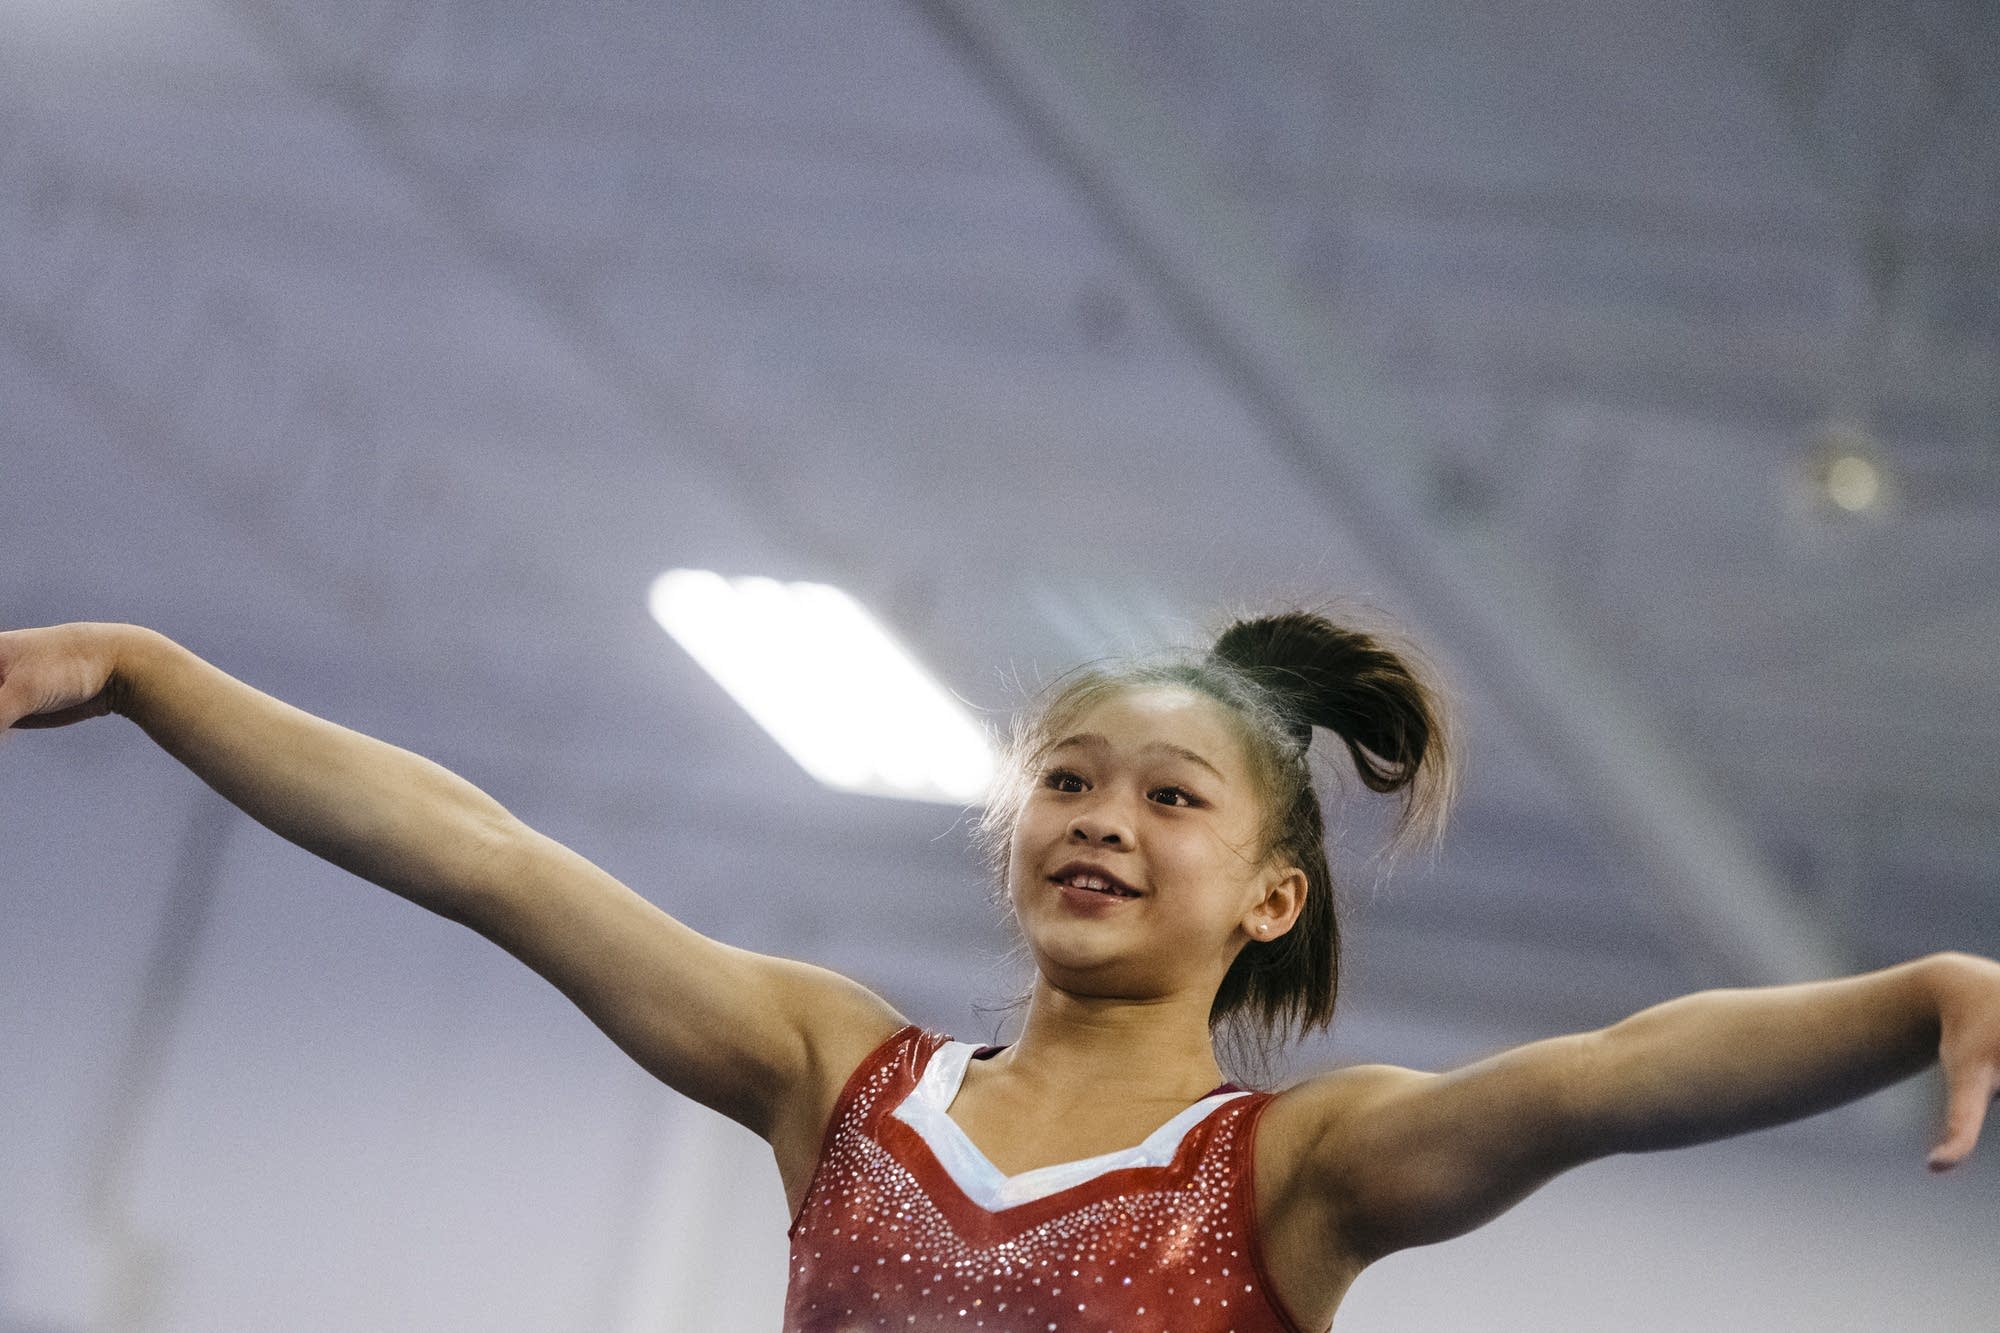 St. Paul Hmong-American gymnast leaps toward her Olympic dream ...